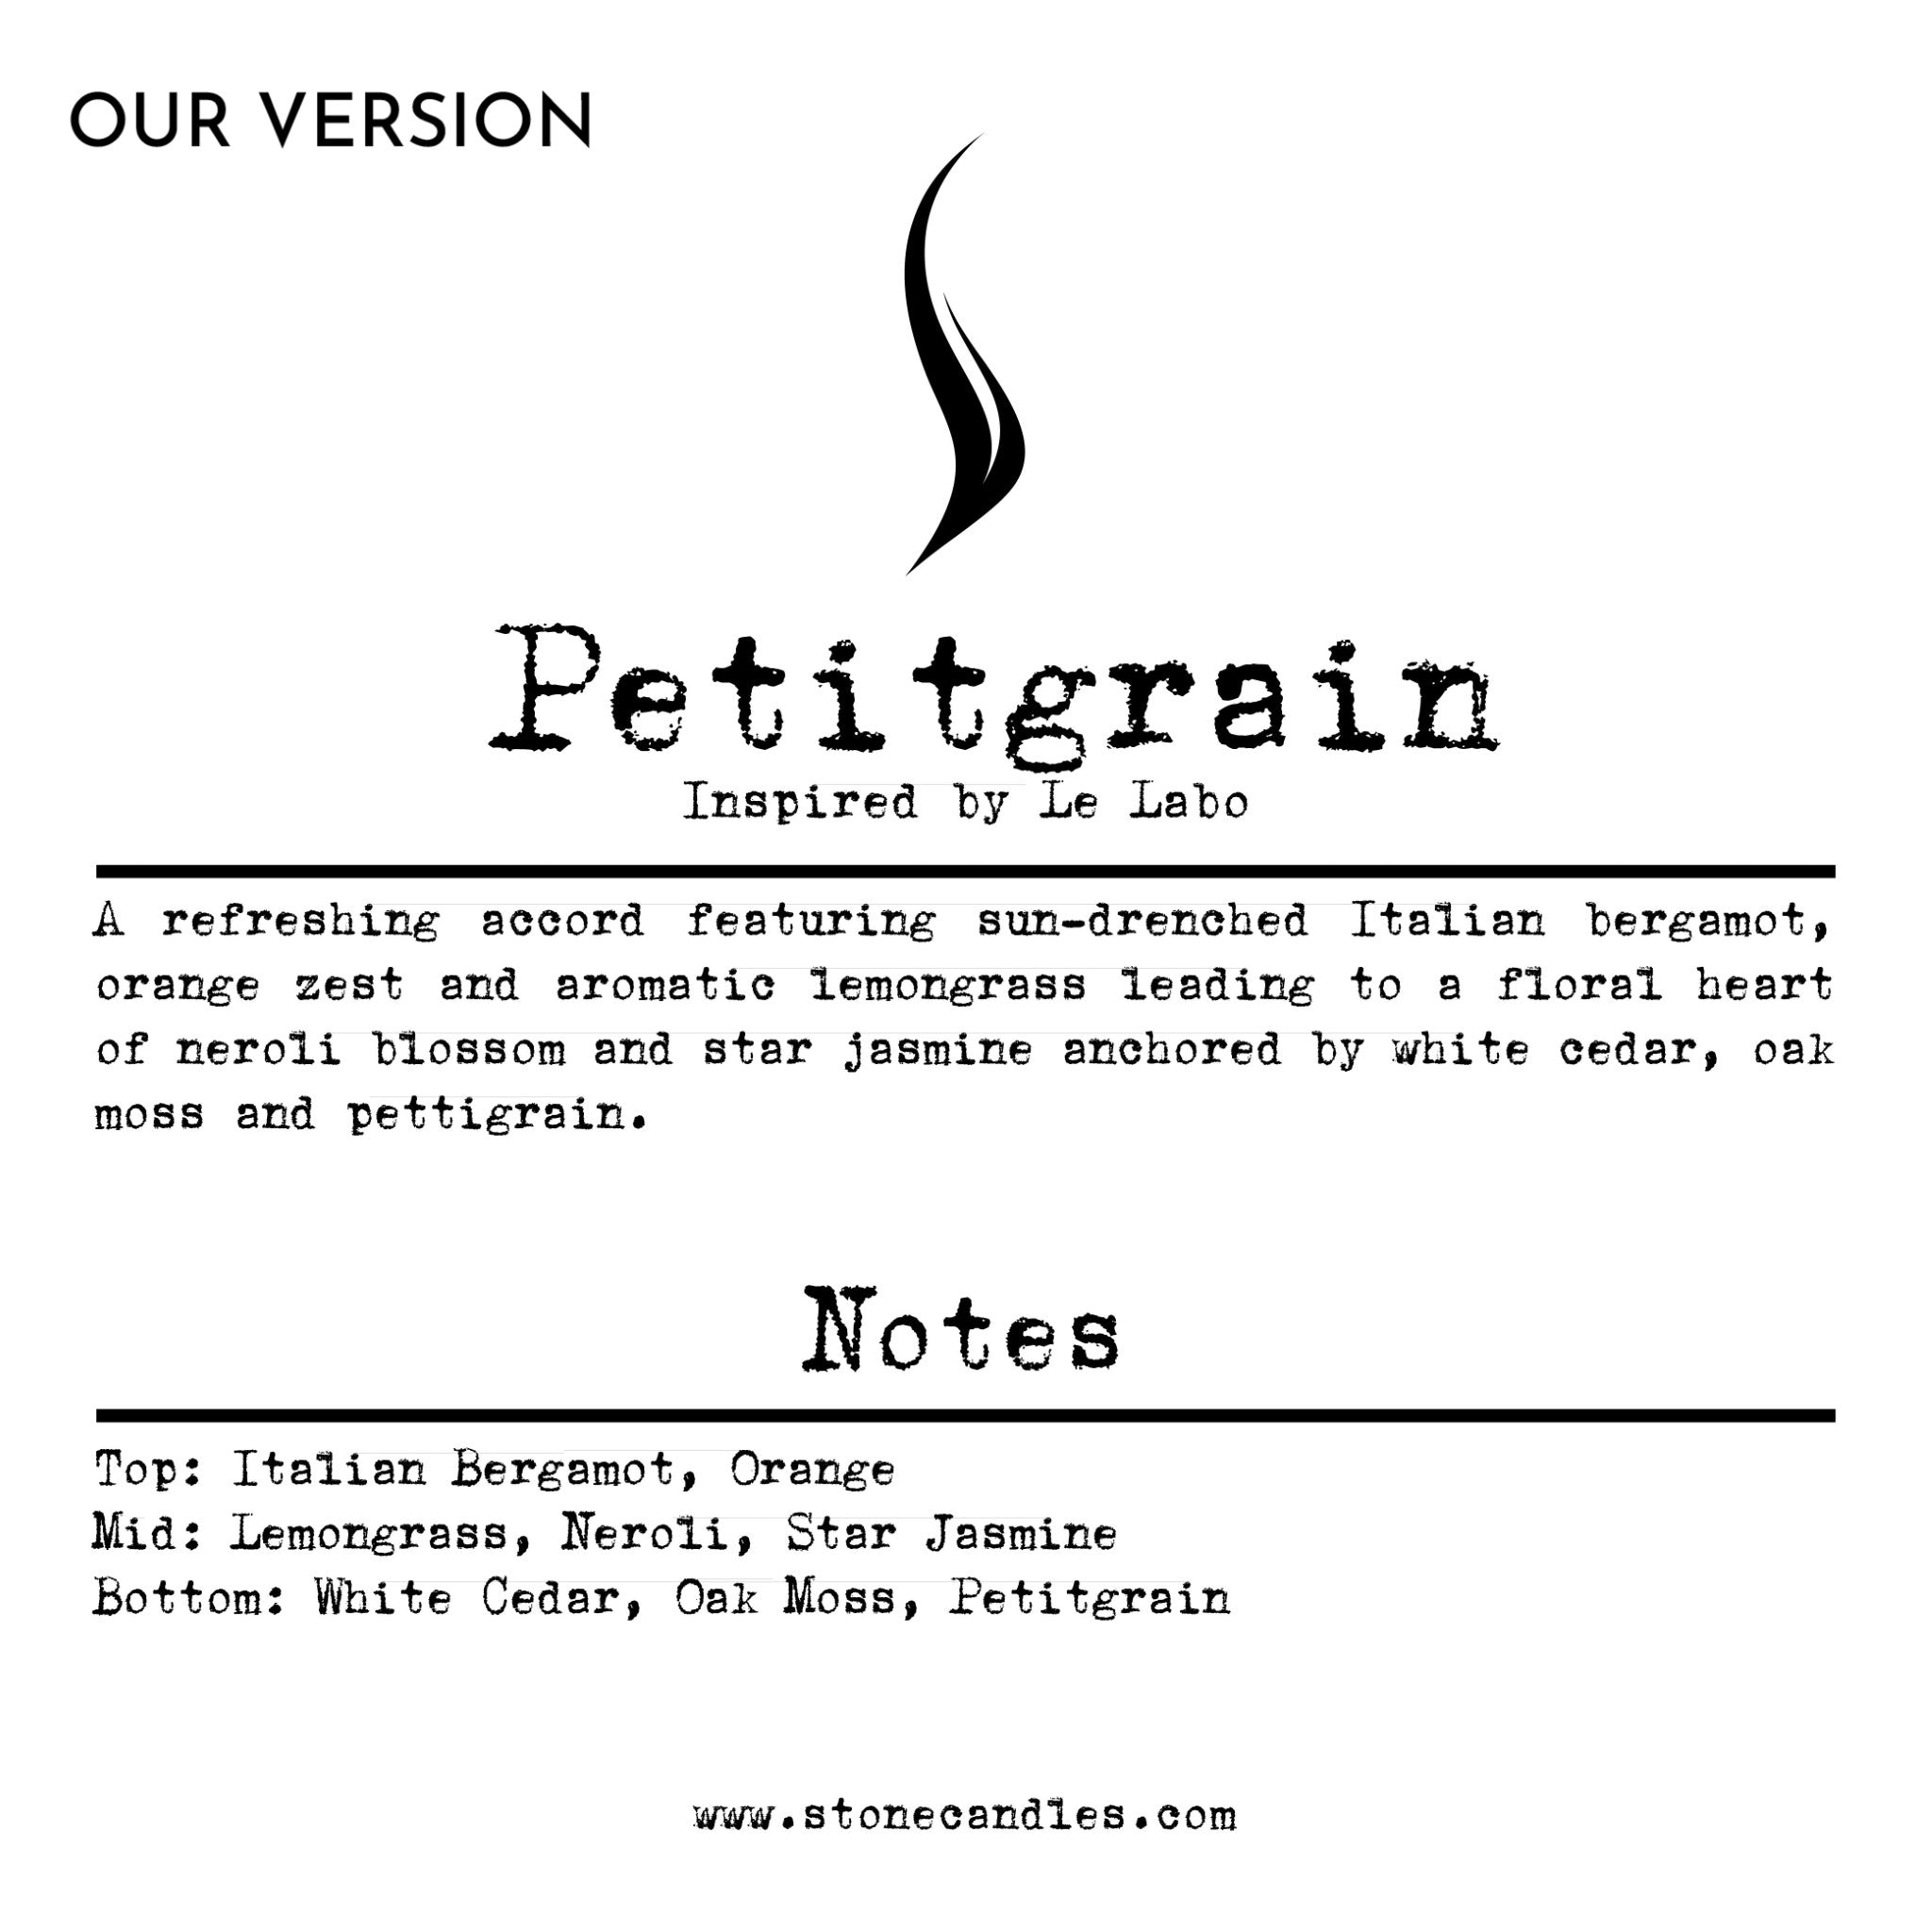 Petitgrain (our version) Sample Scent Strip